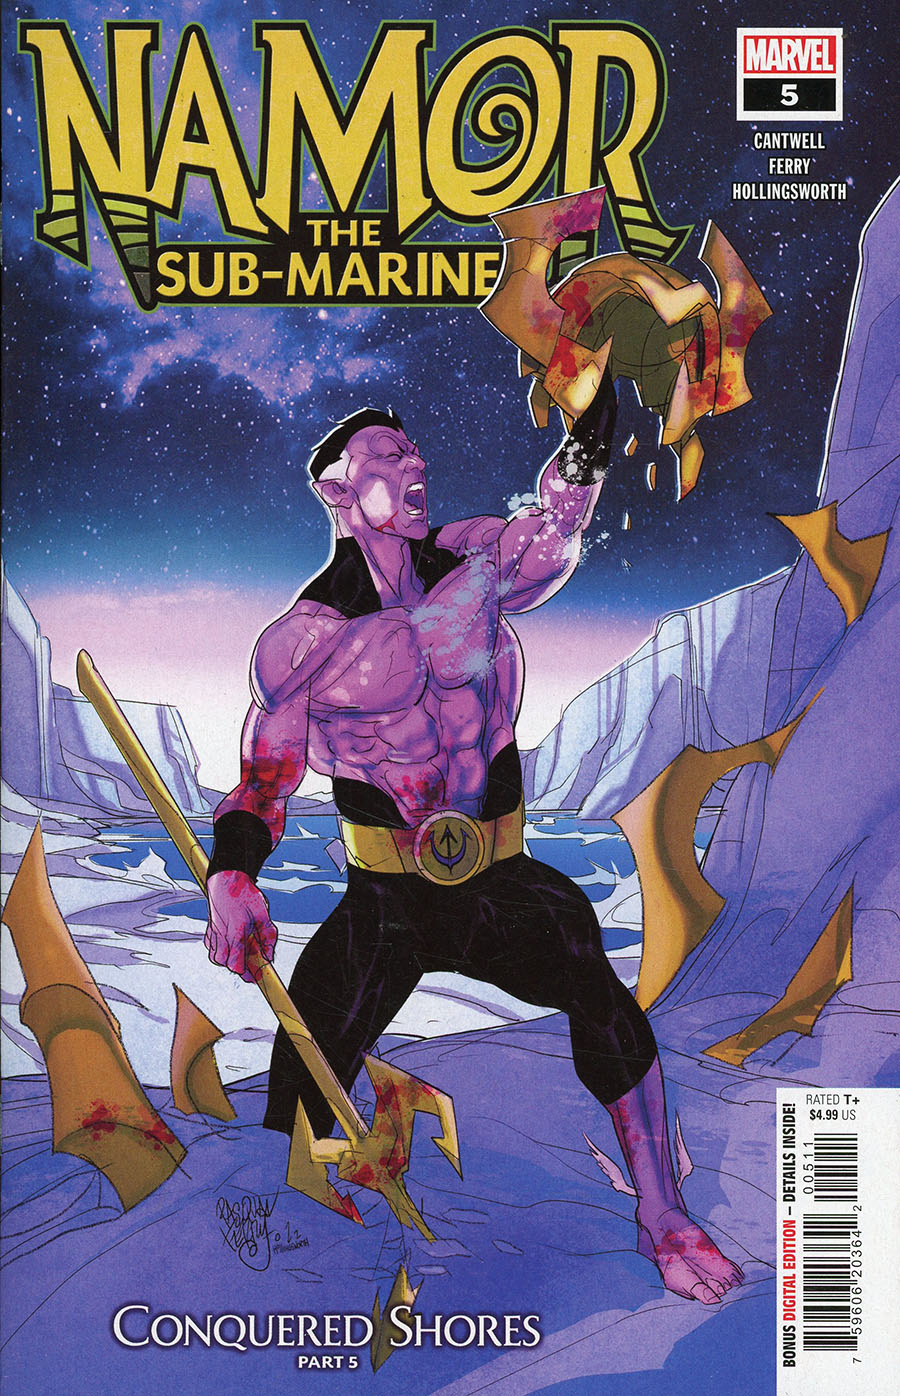 Namor The Sub-Mariner Conquered Shores #5